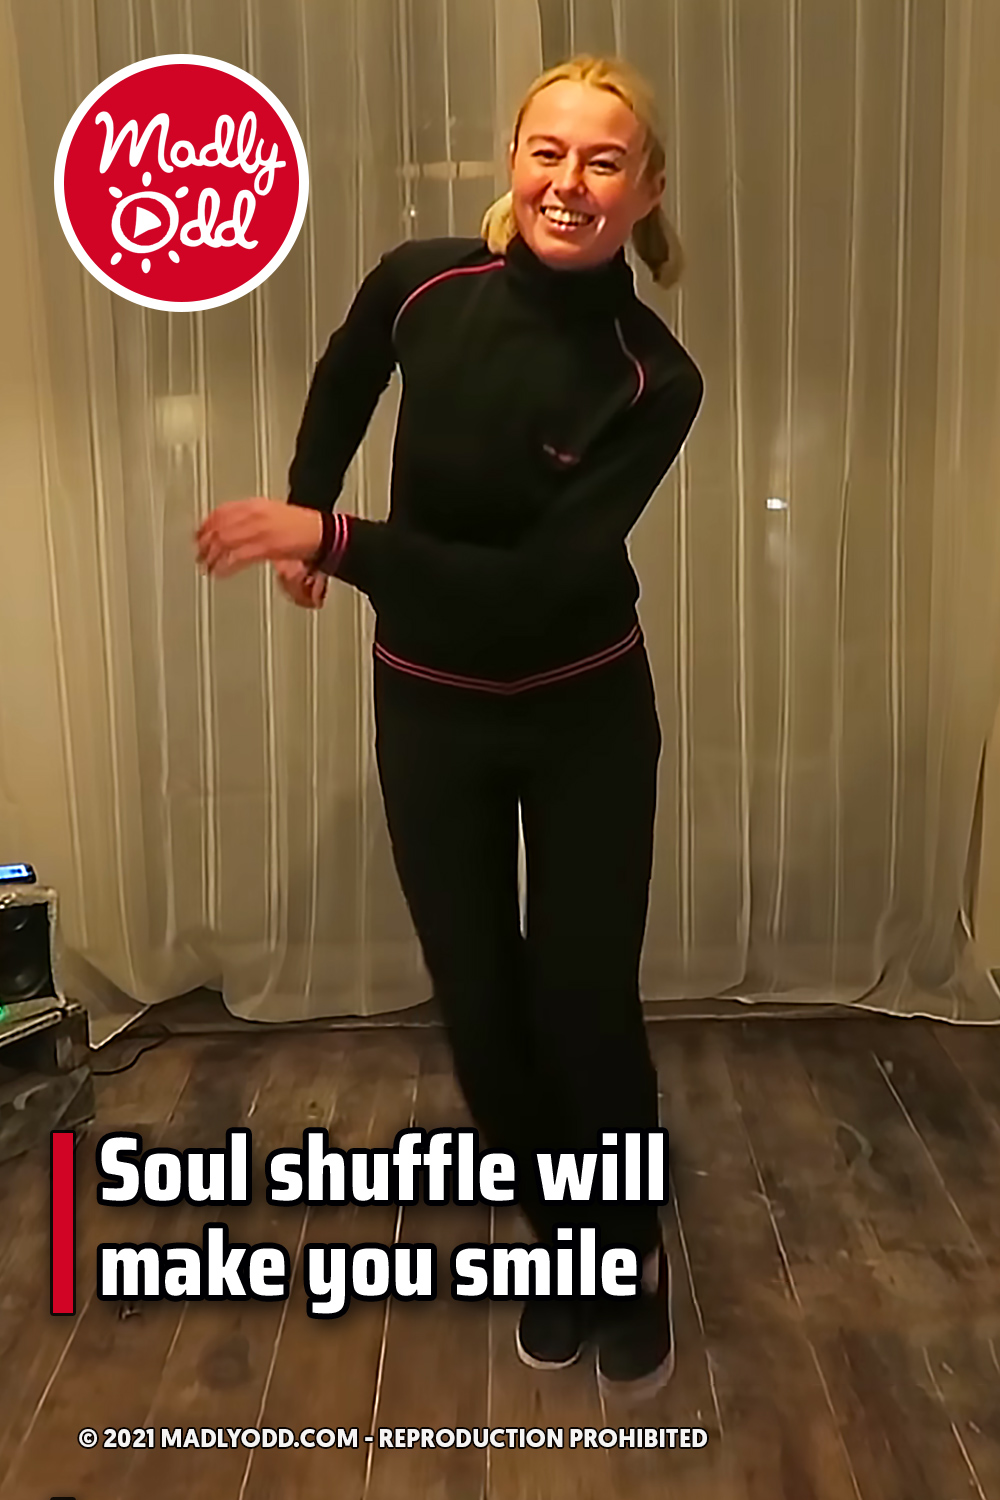 Soul shuffle will make you smile